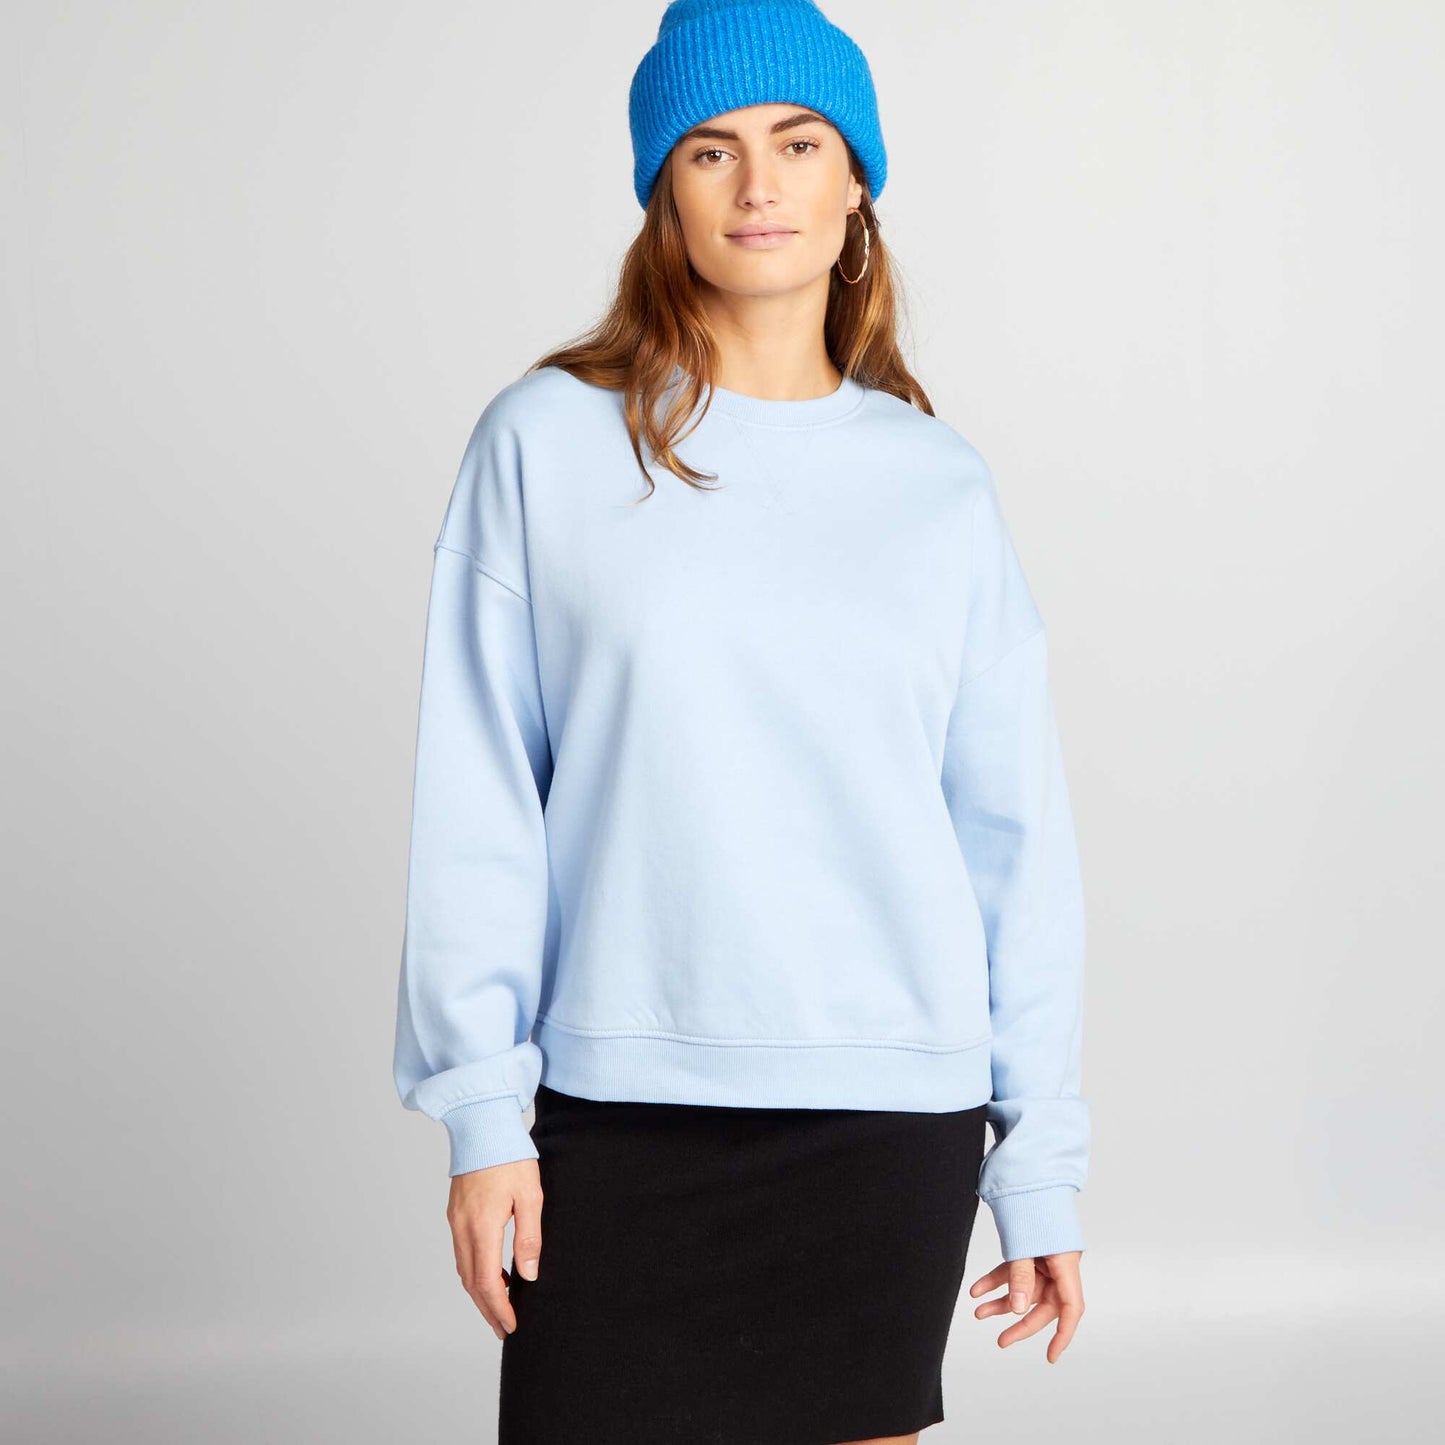 Plain sweatshirt fabric sweater BLUE